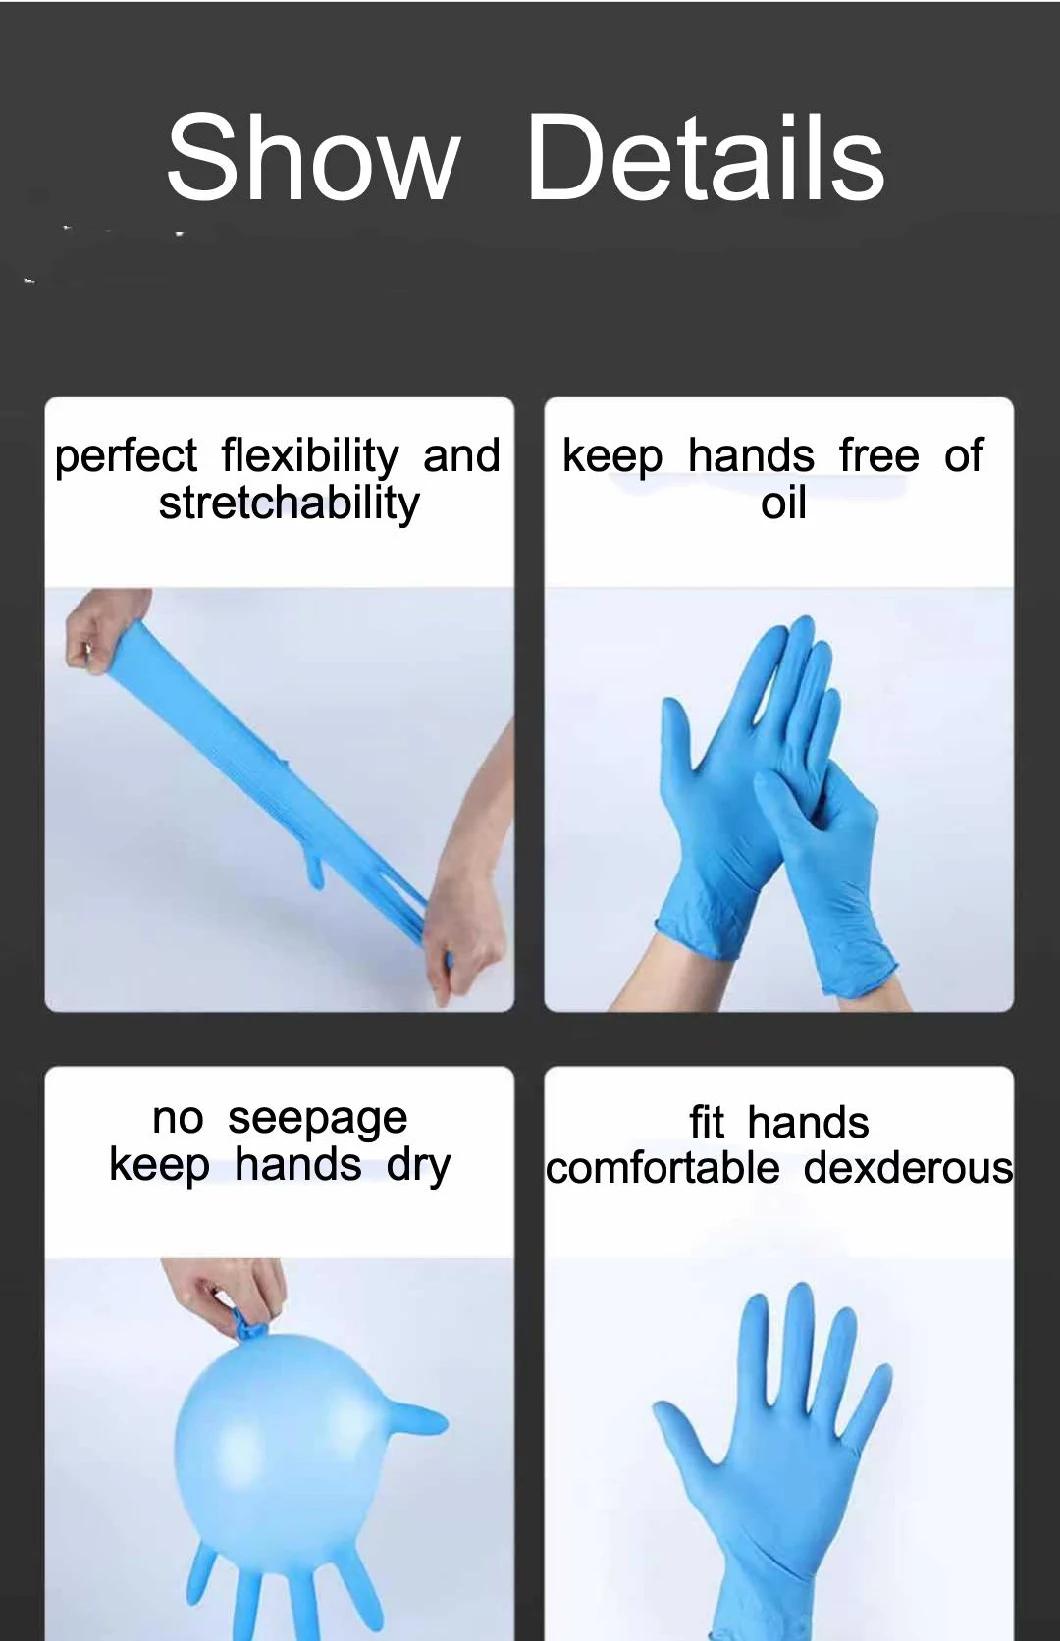 FDA CE Medico Grade Disposable Nitrile Blend Gloves